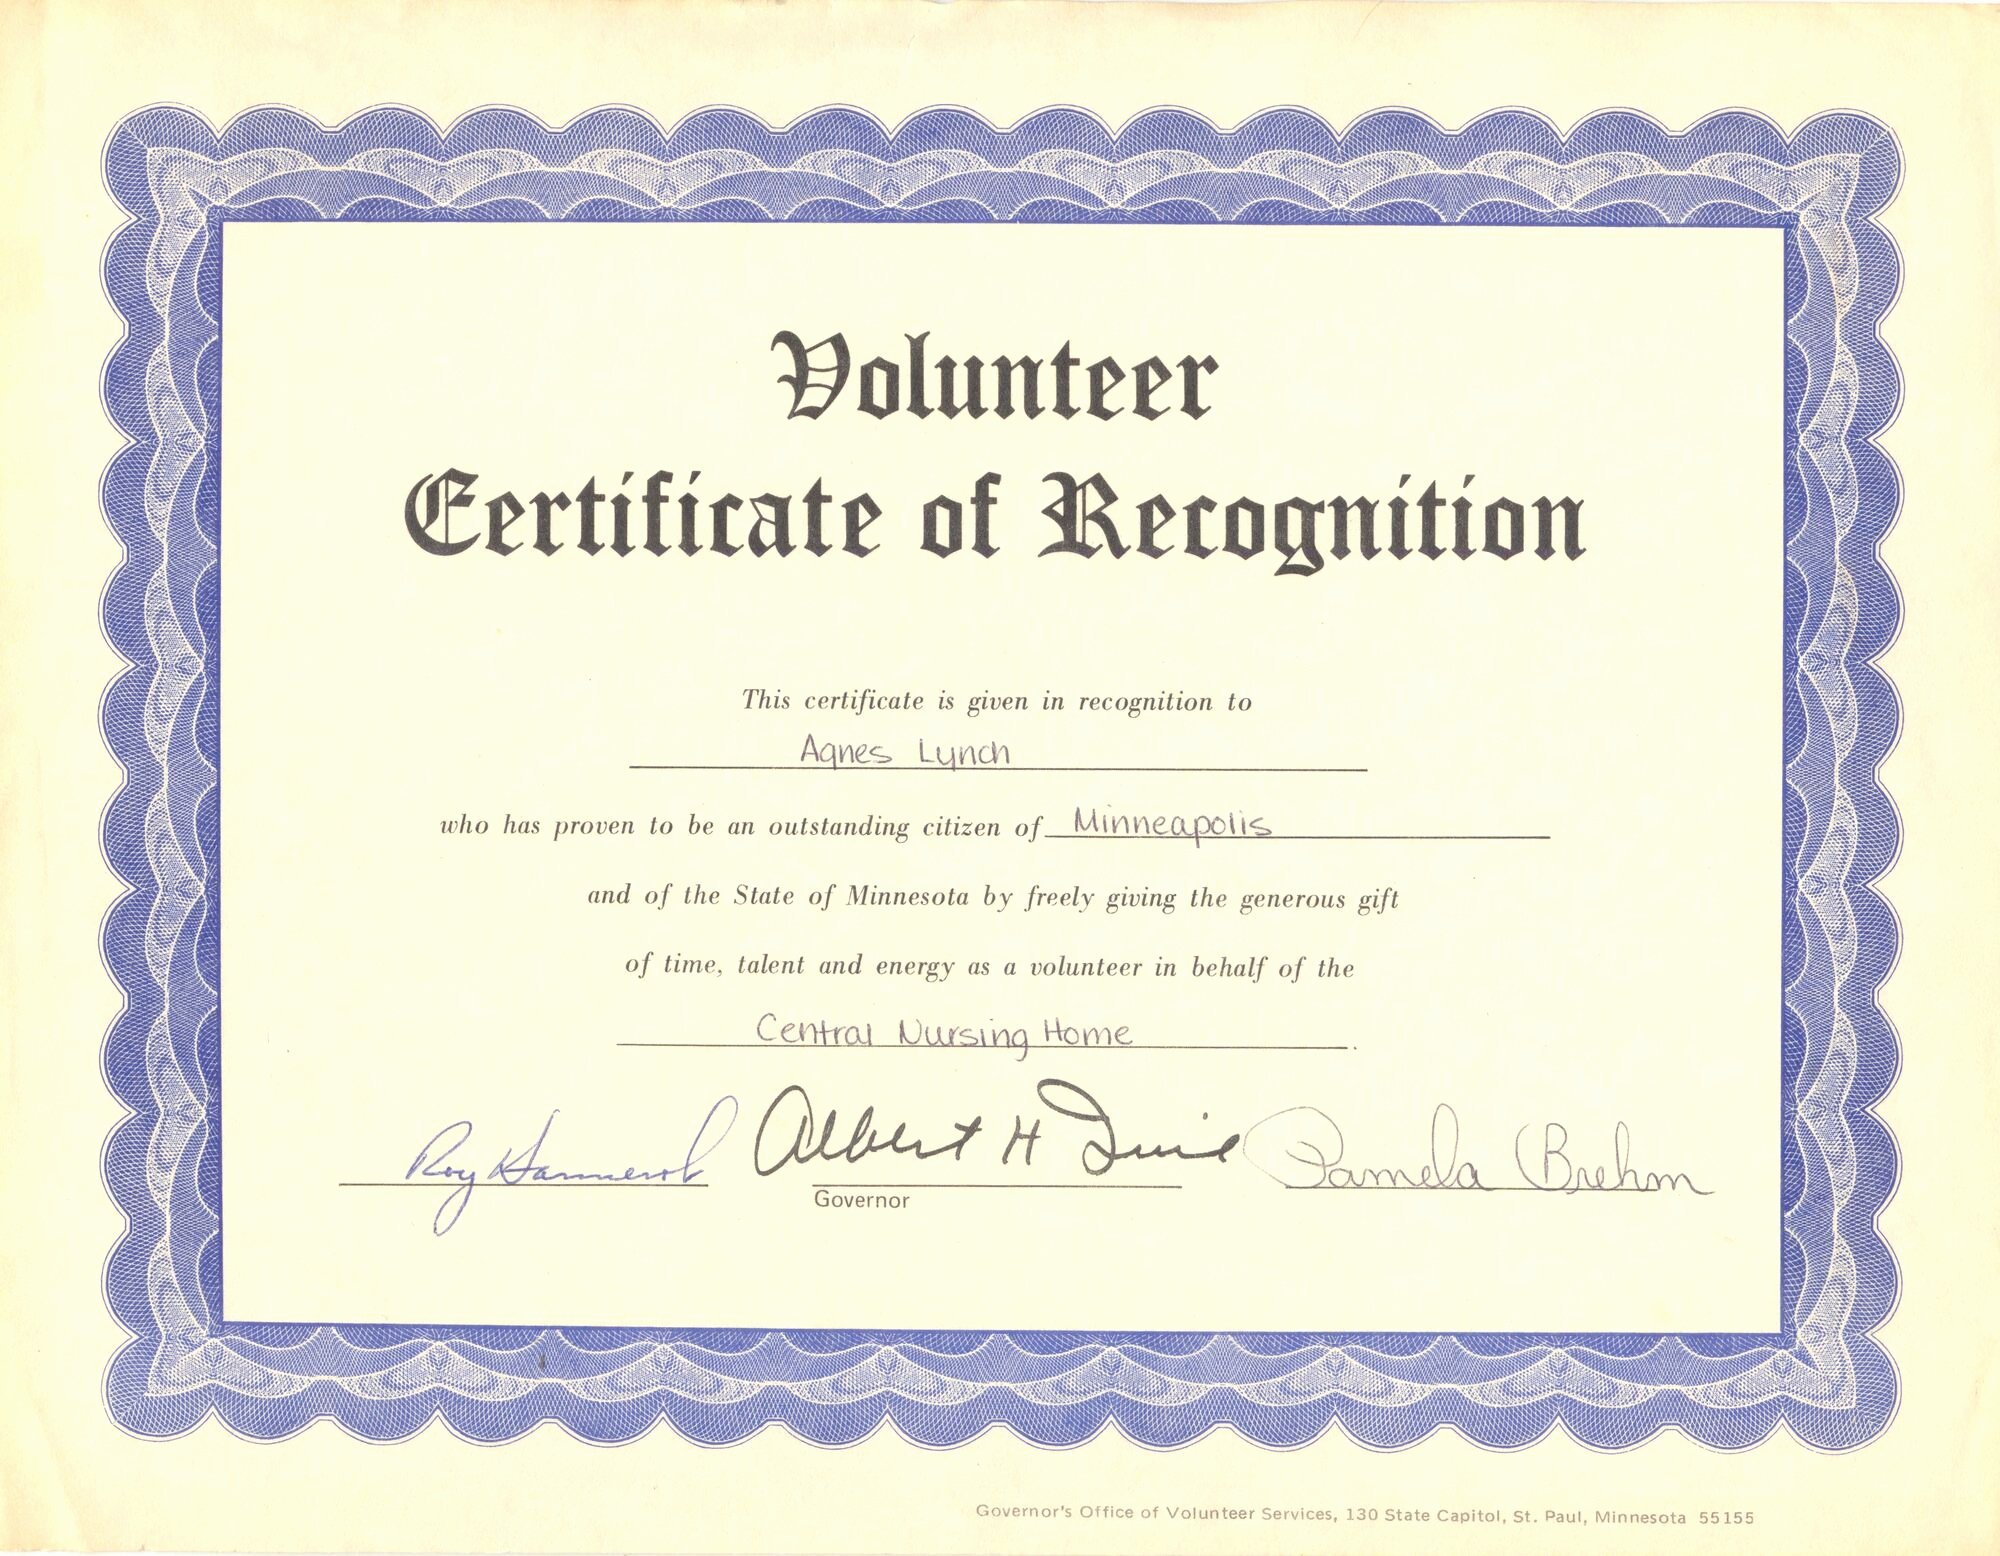 Good Samaritan Award Certificates Luxury Image Volunteer Certificate Agnes Lynch